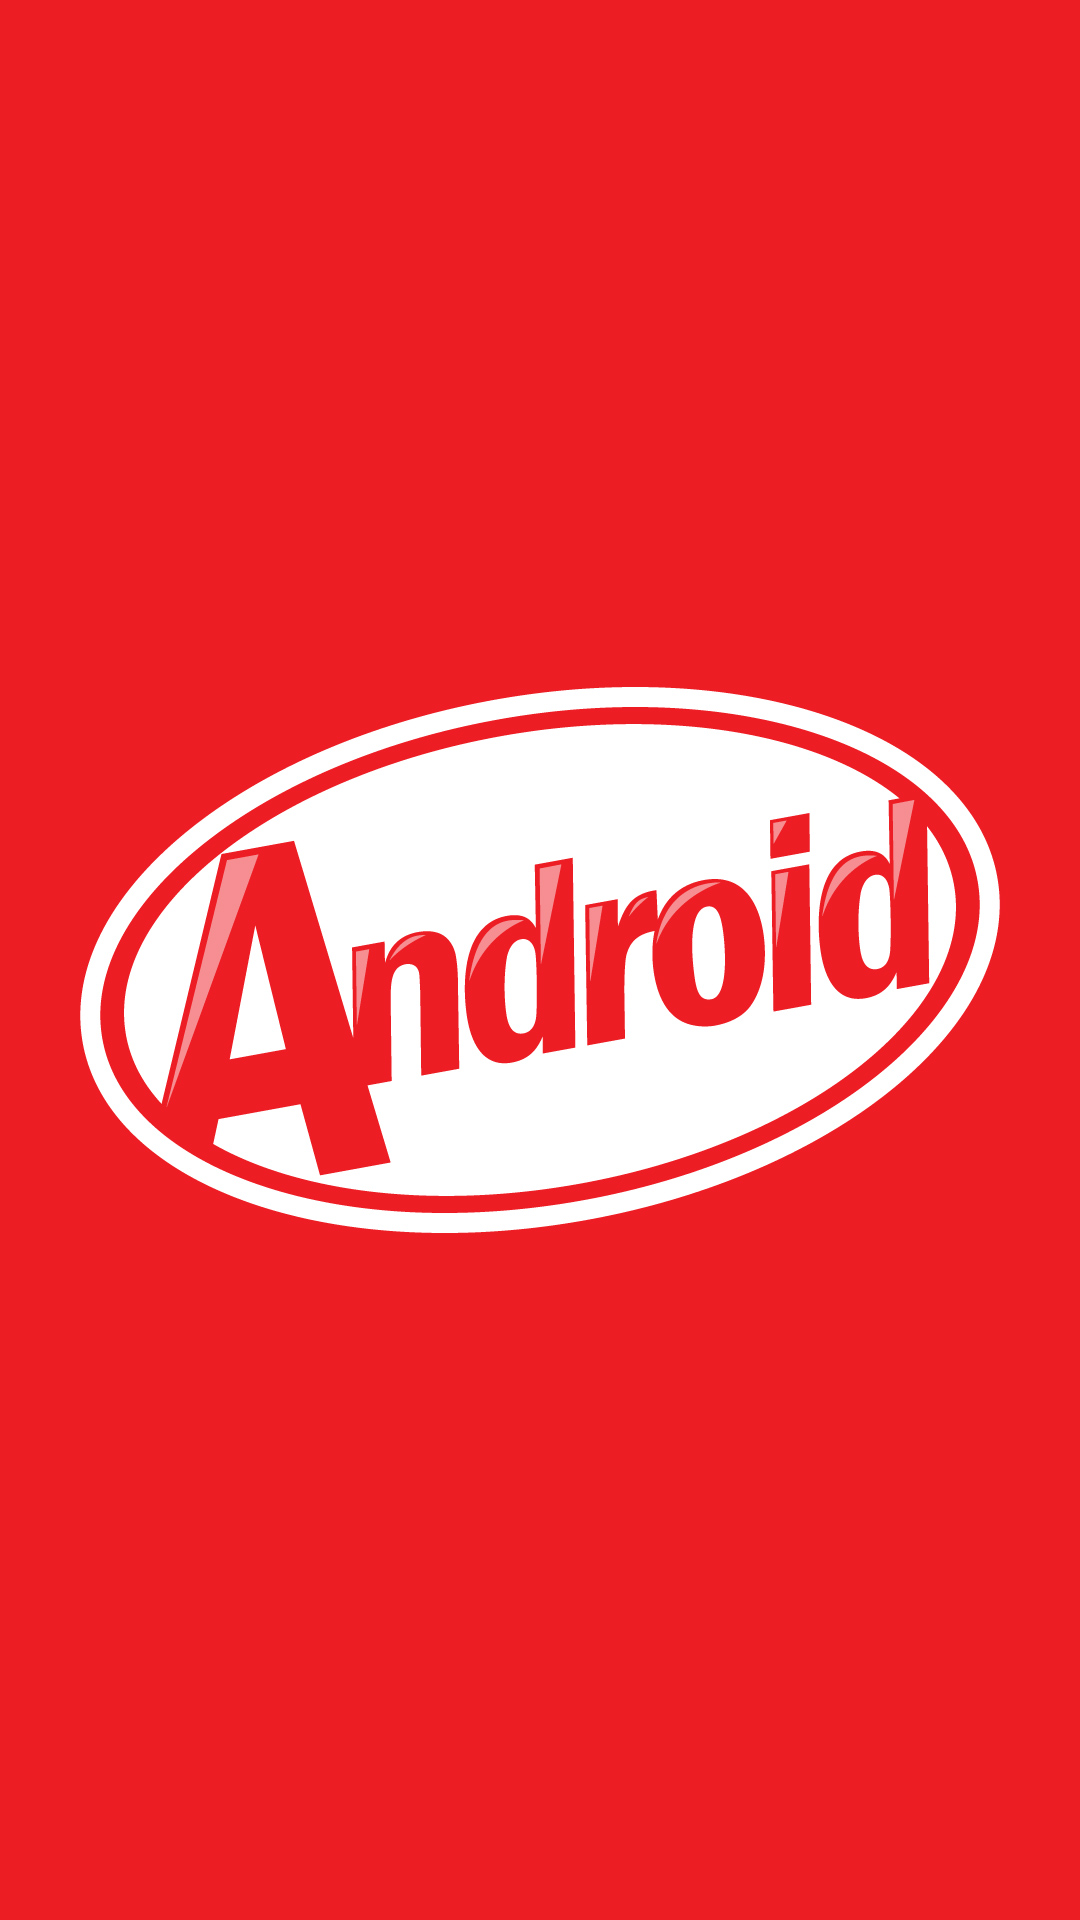 Android 4.4.2 KitKat Logo Lockscreen Android Wallpaper free download